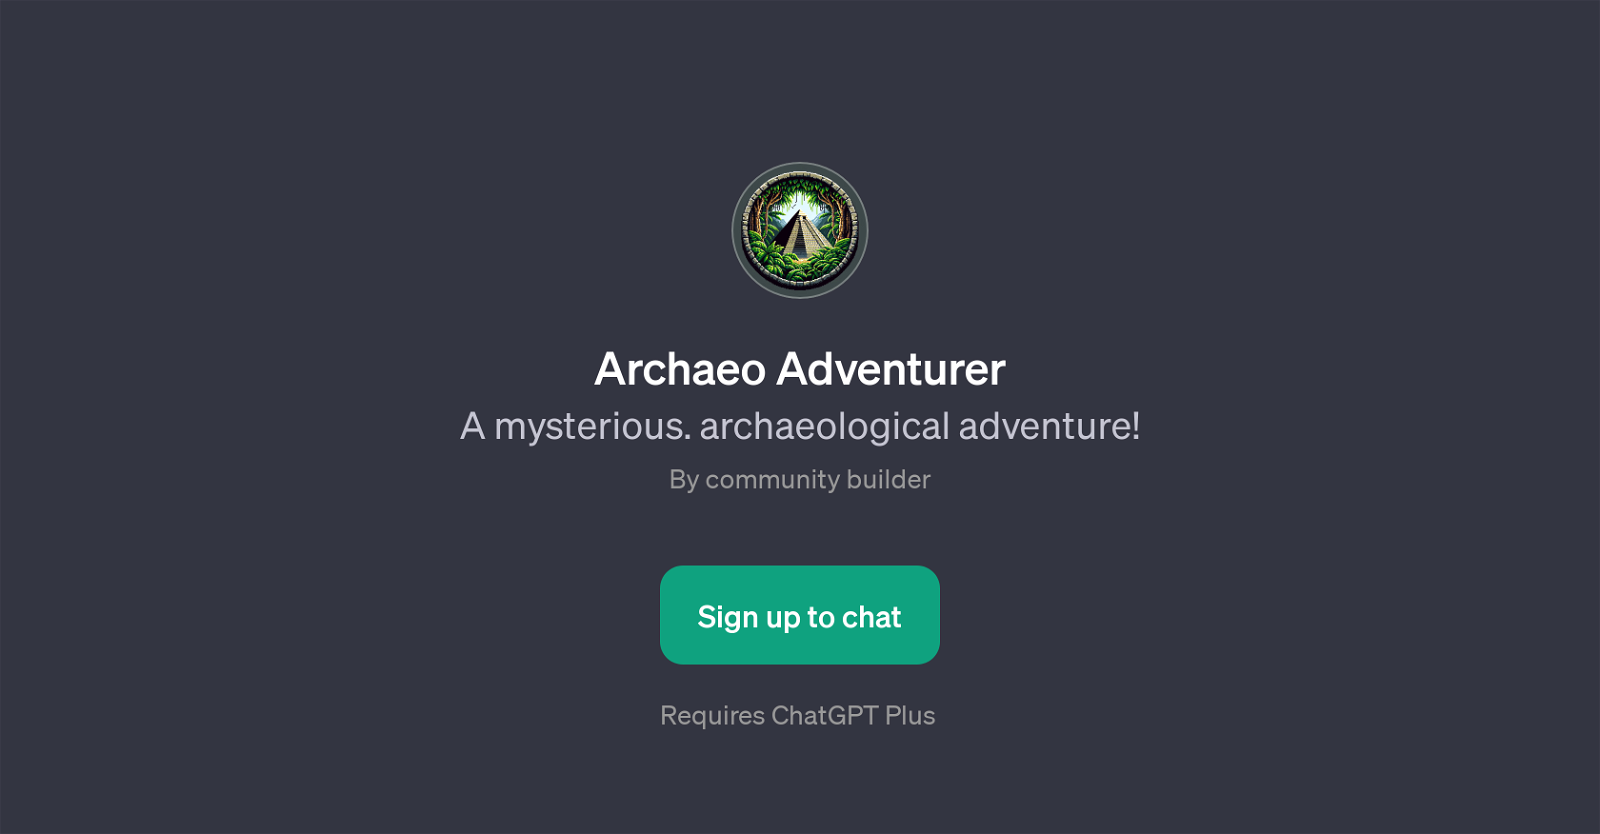 Archaeo Adventurer website